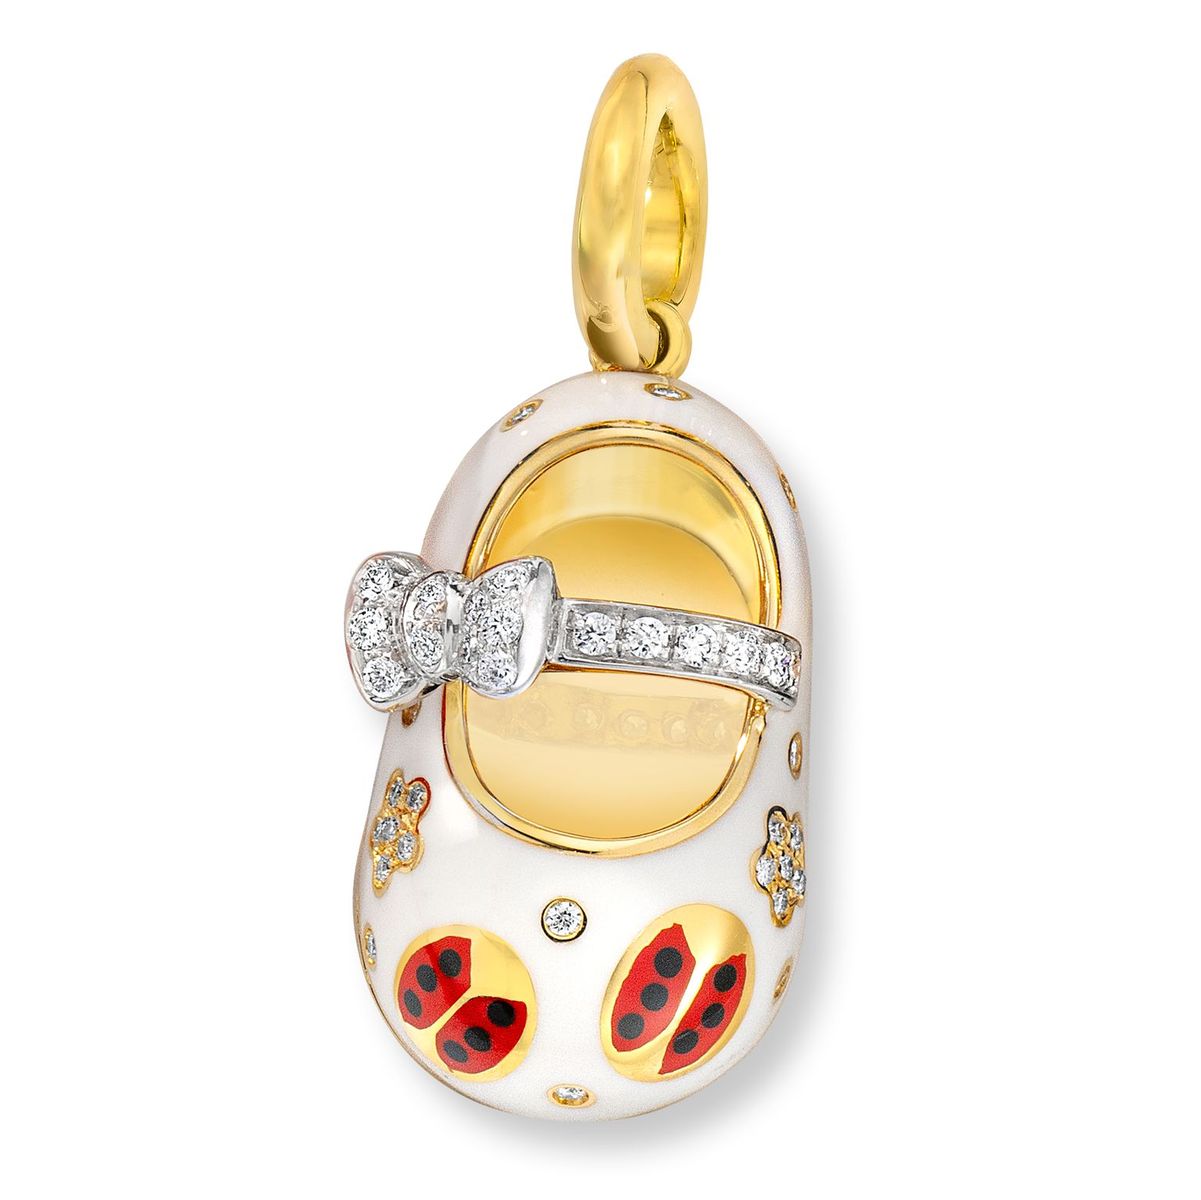 Patriotic & Ladybug Good Luck Necklace